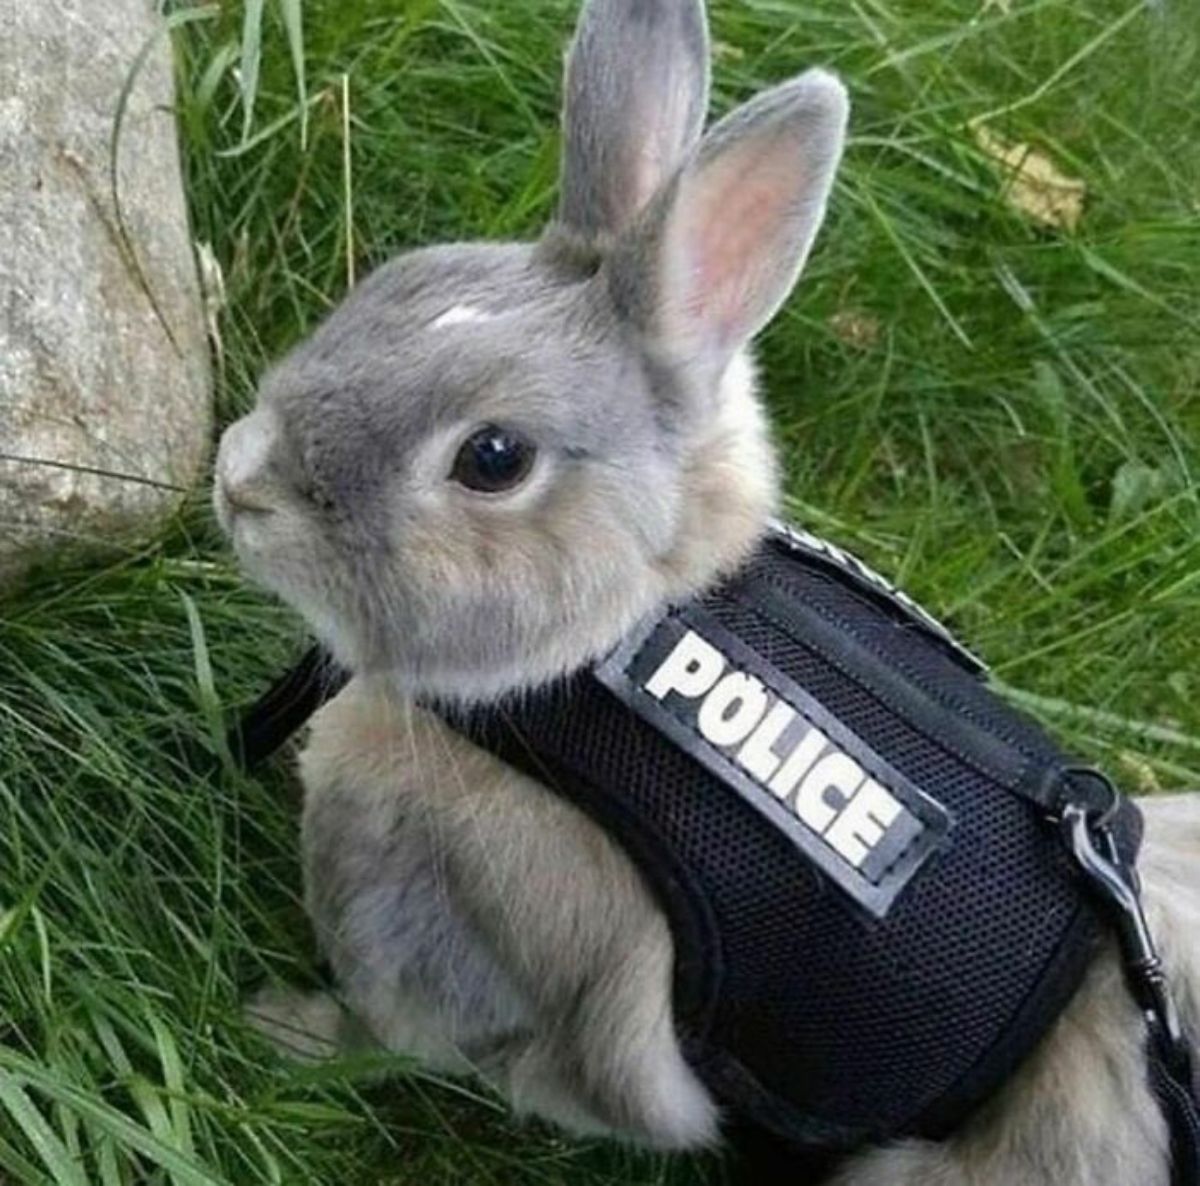 grey rabbit wearing a black harness saying police